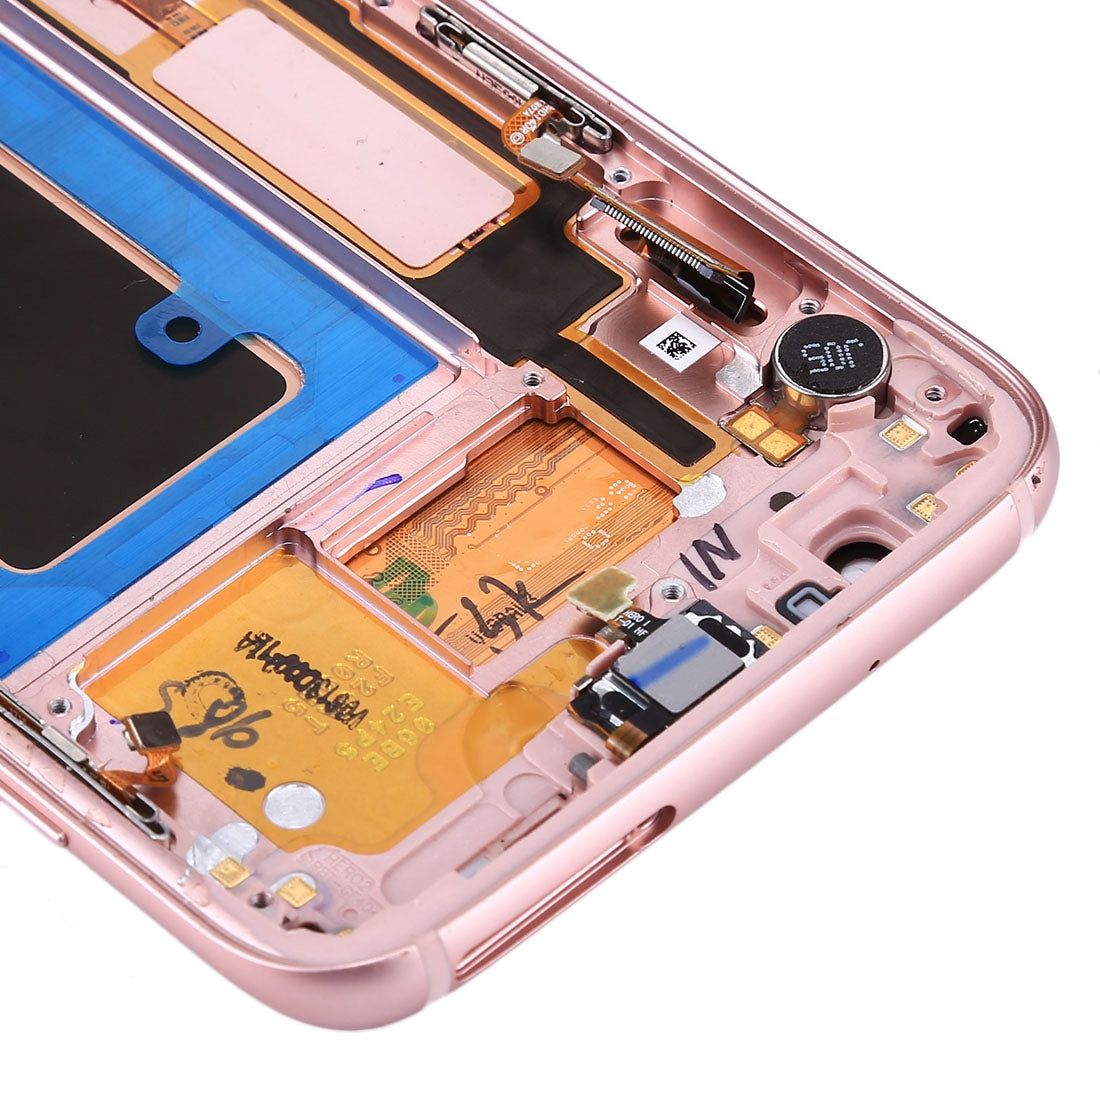 Ecran Complet + Tactile + Châssis Samsung Galaxy S7 Edge / G935F Rose